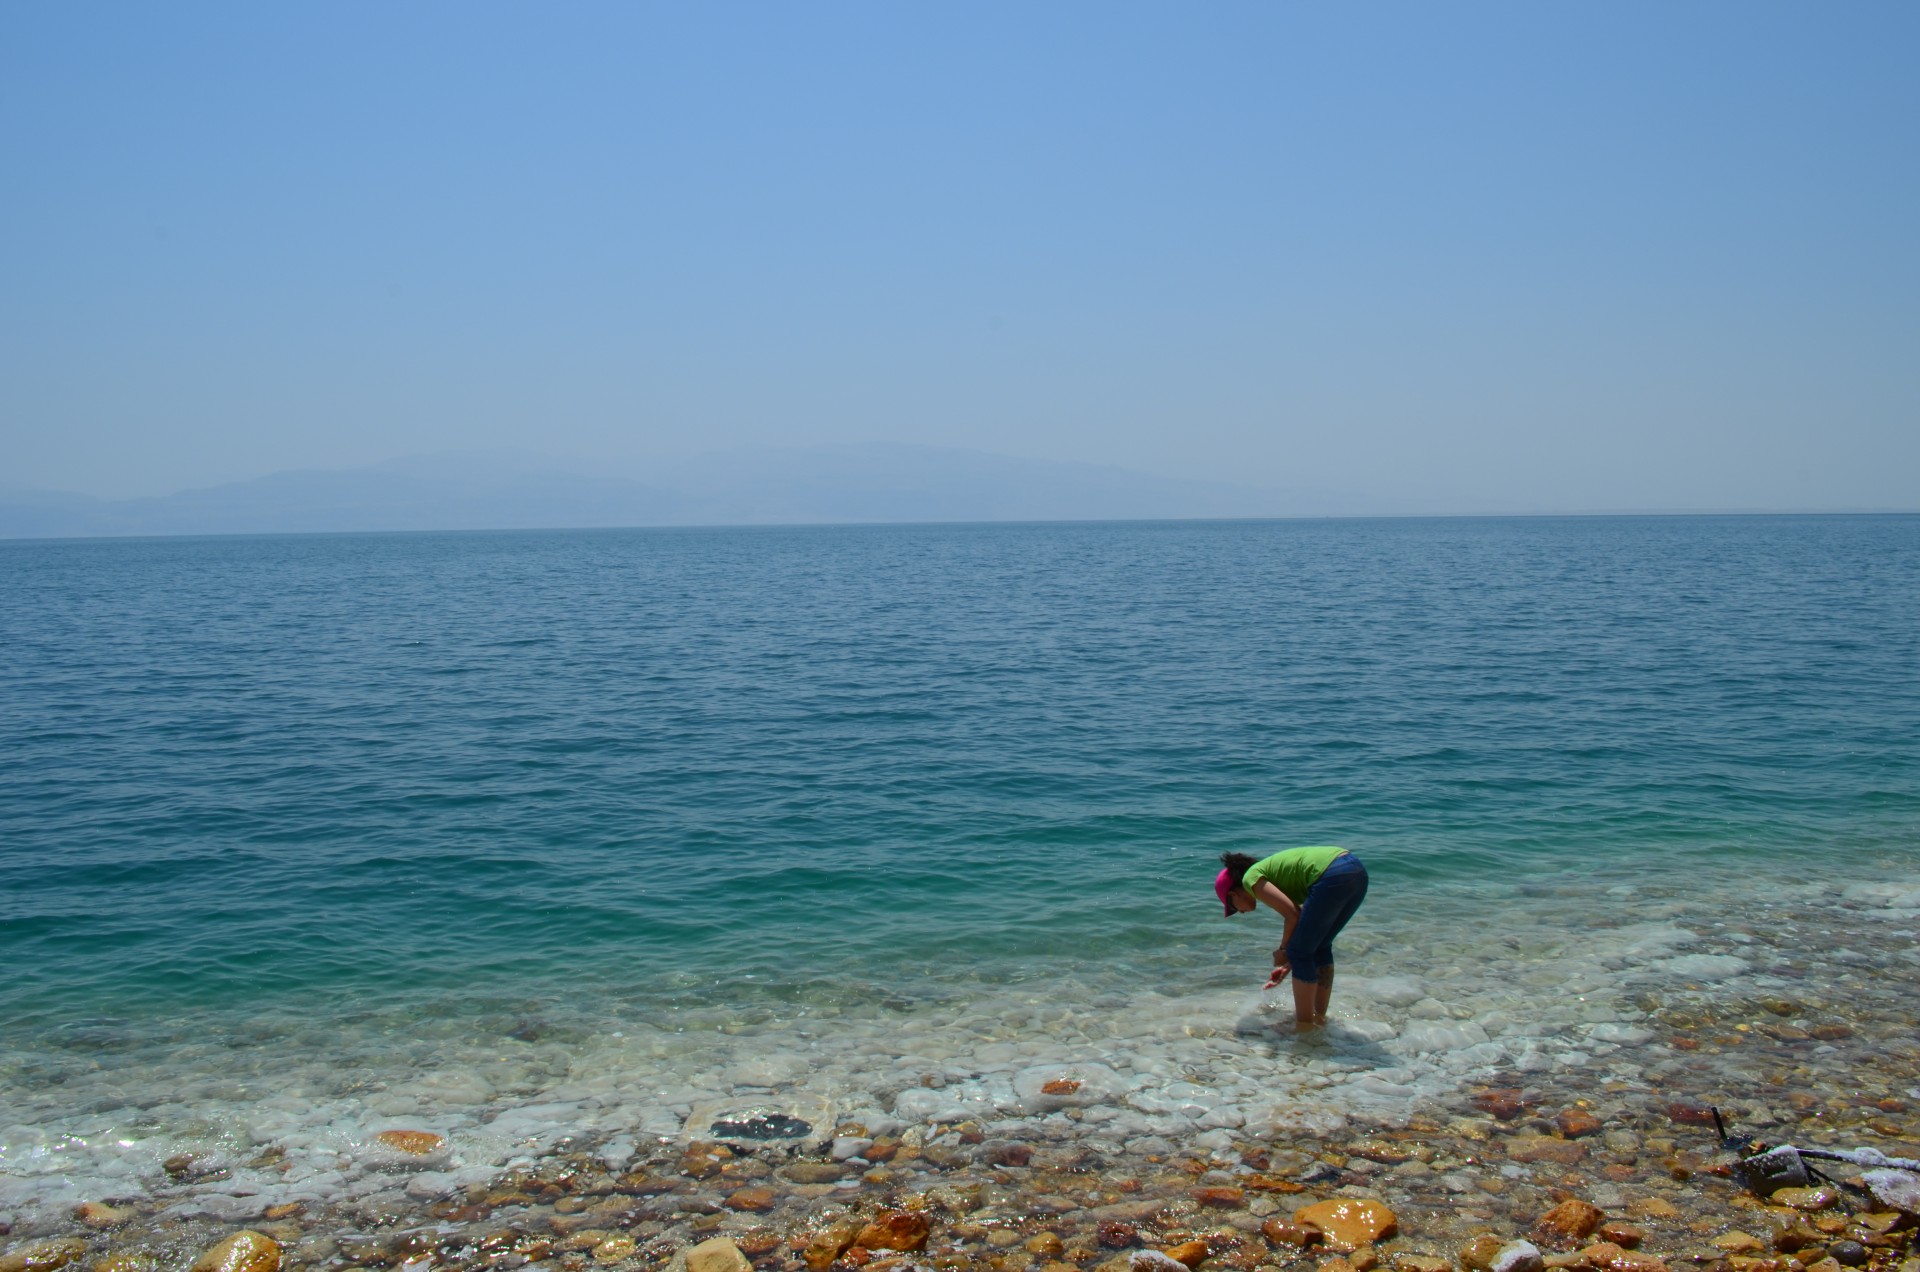 Lamont geochemist Yael Kiro samples salt deposits forming on the Dead Sea shore. (All photos: Kevin Krajick)